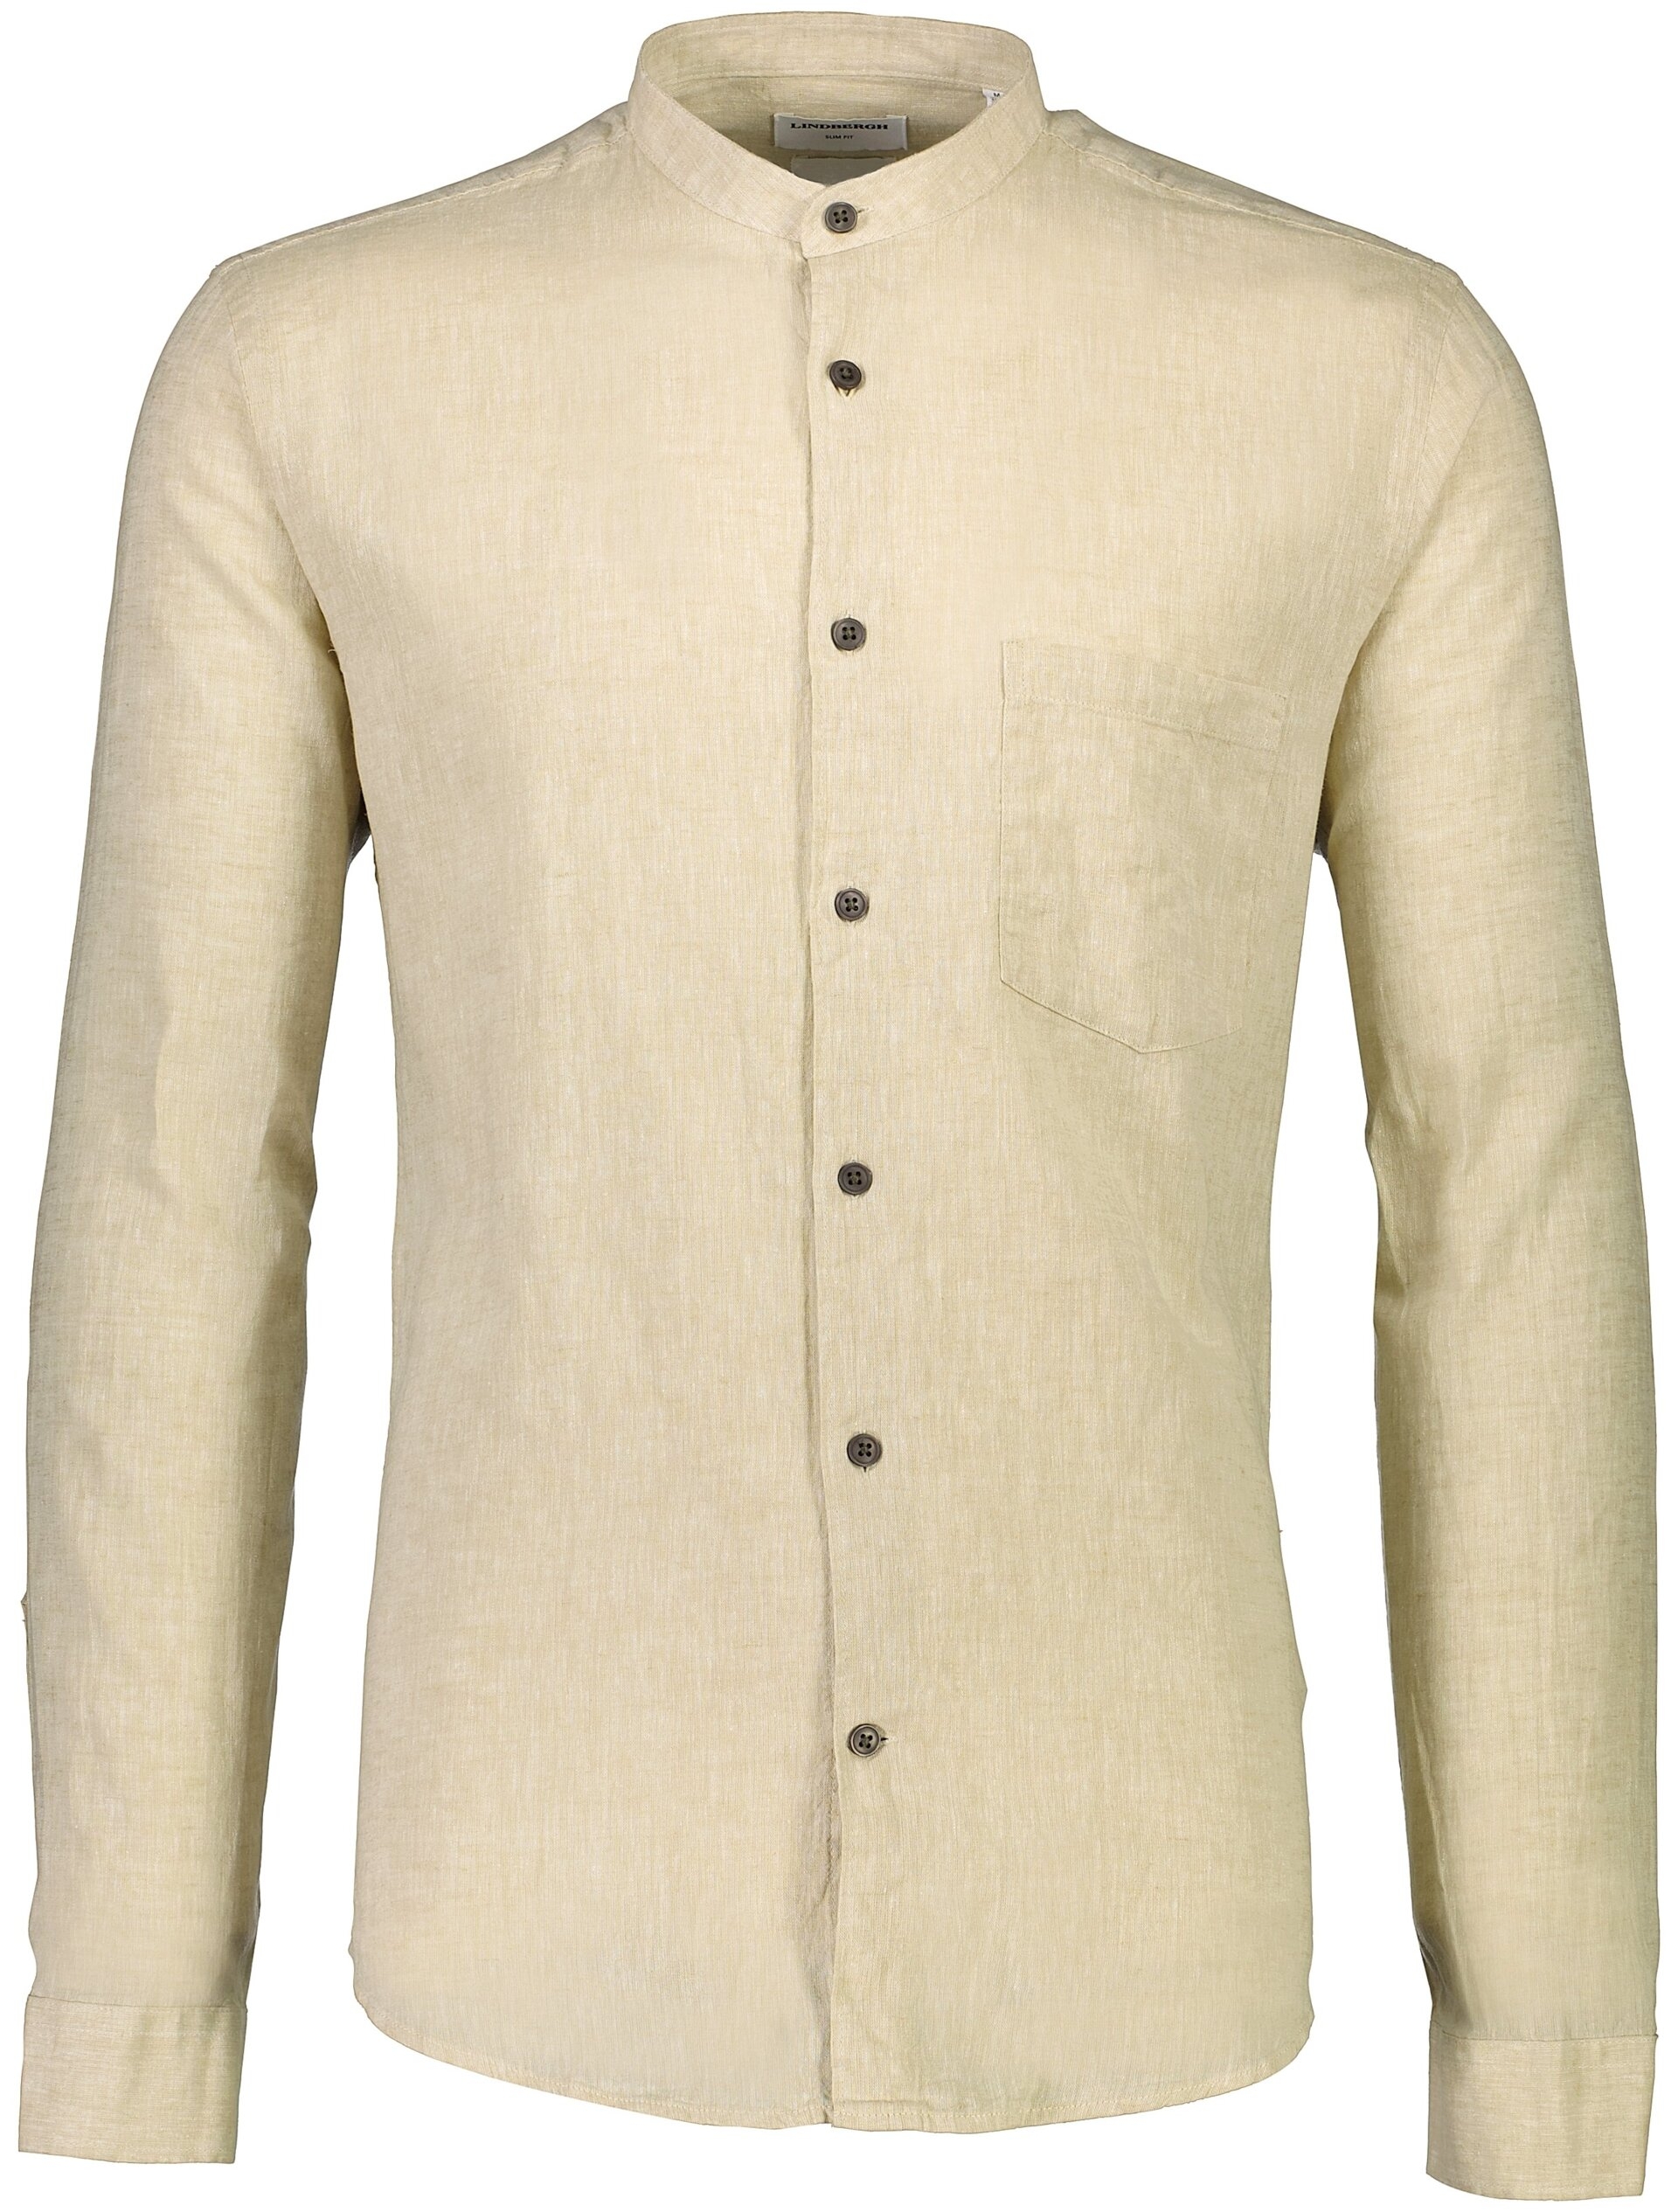 Lindbergh Linen shirt grey / lt stone